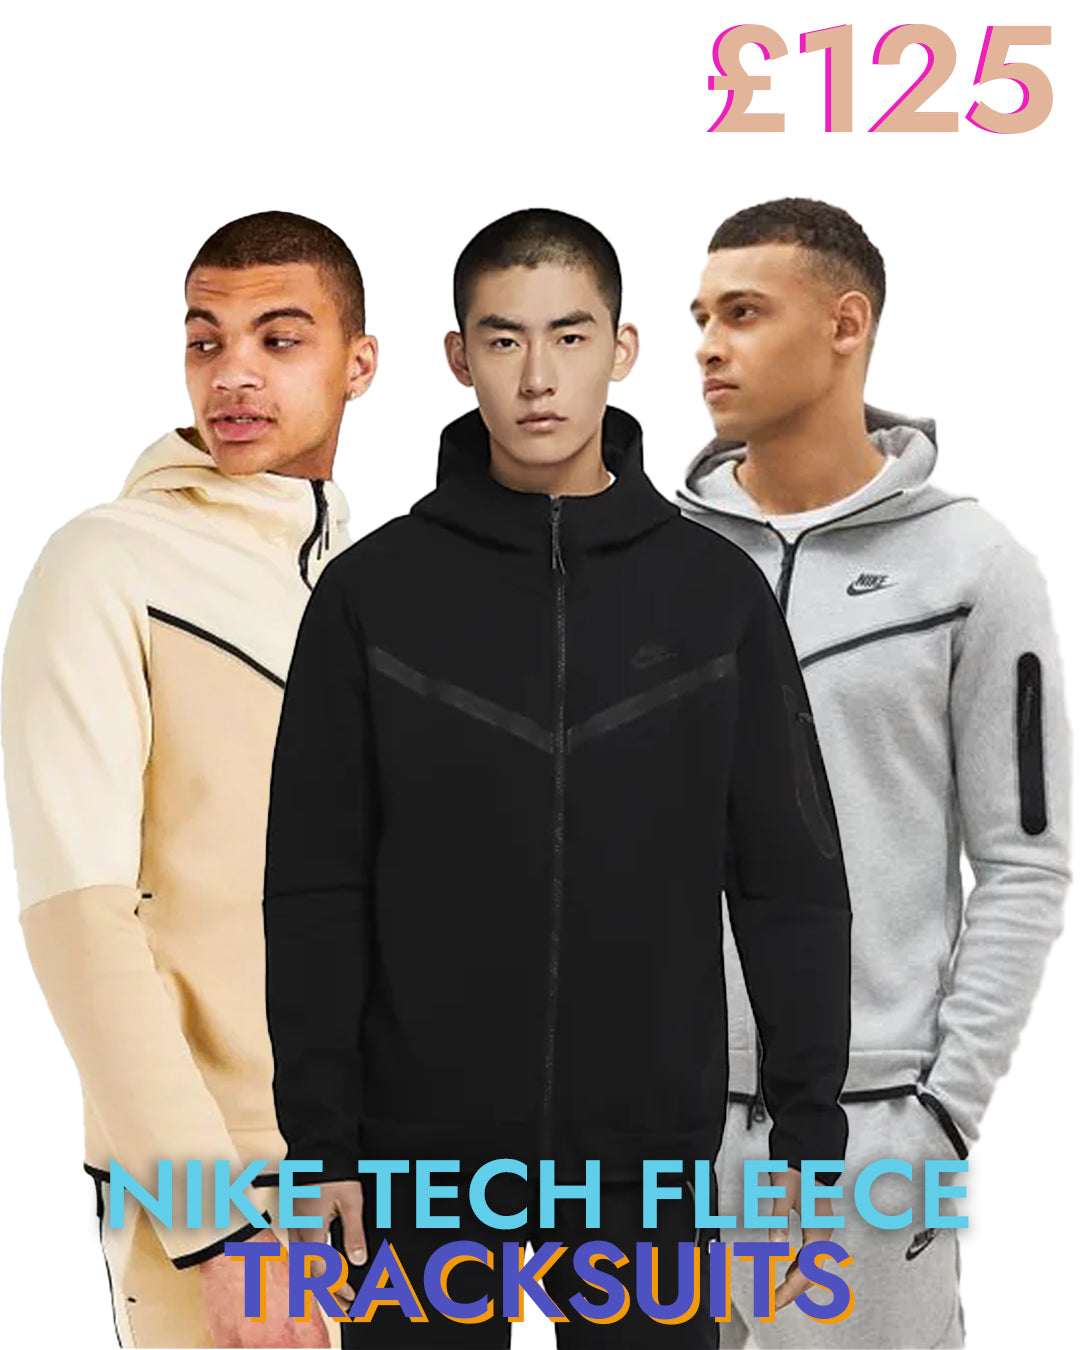 Nike Tech Fleece Tracksuits